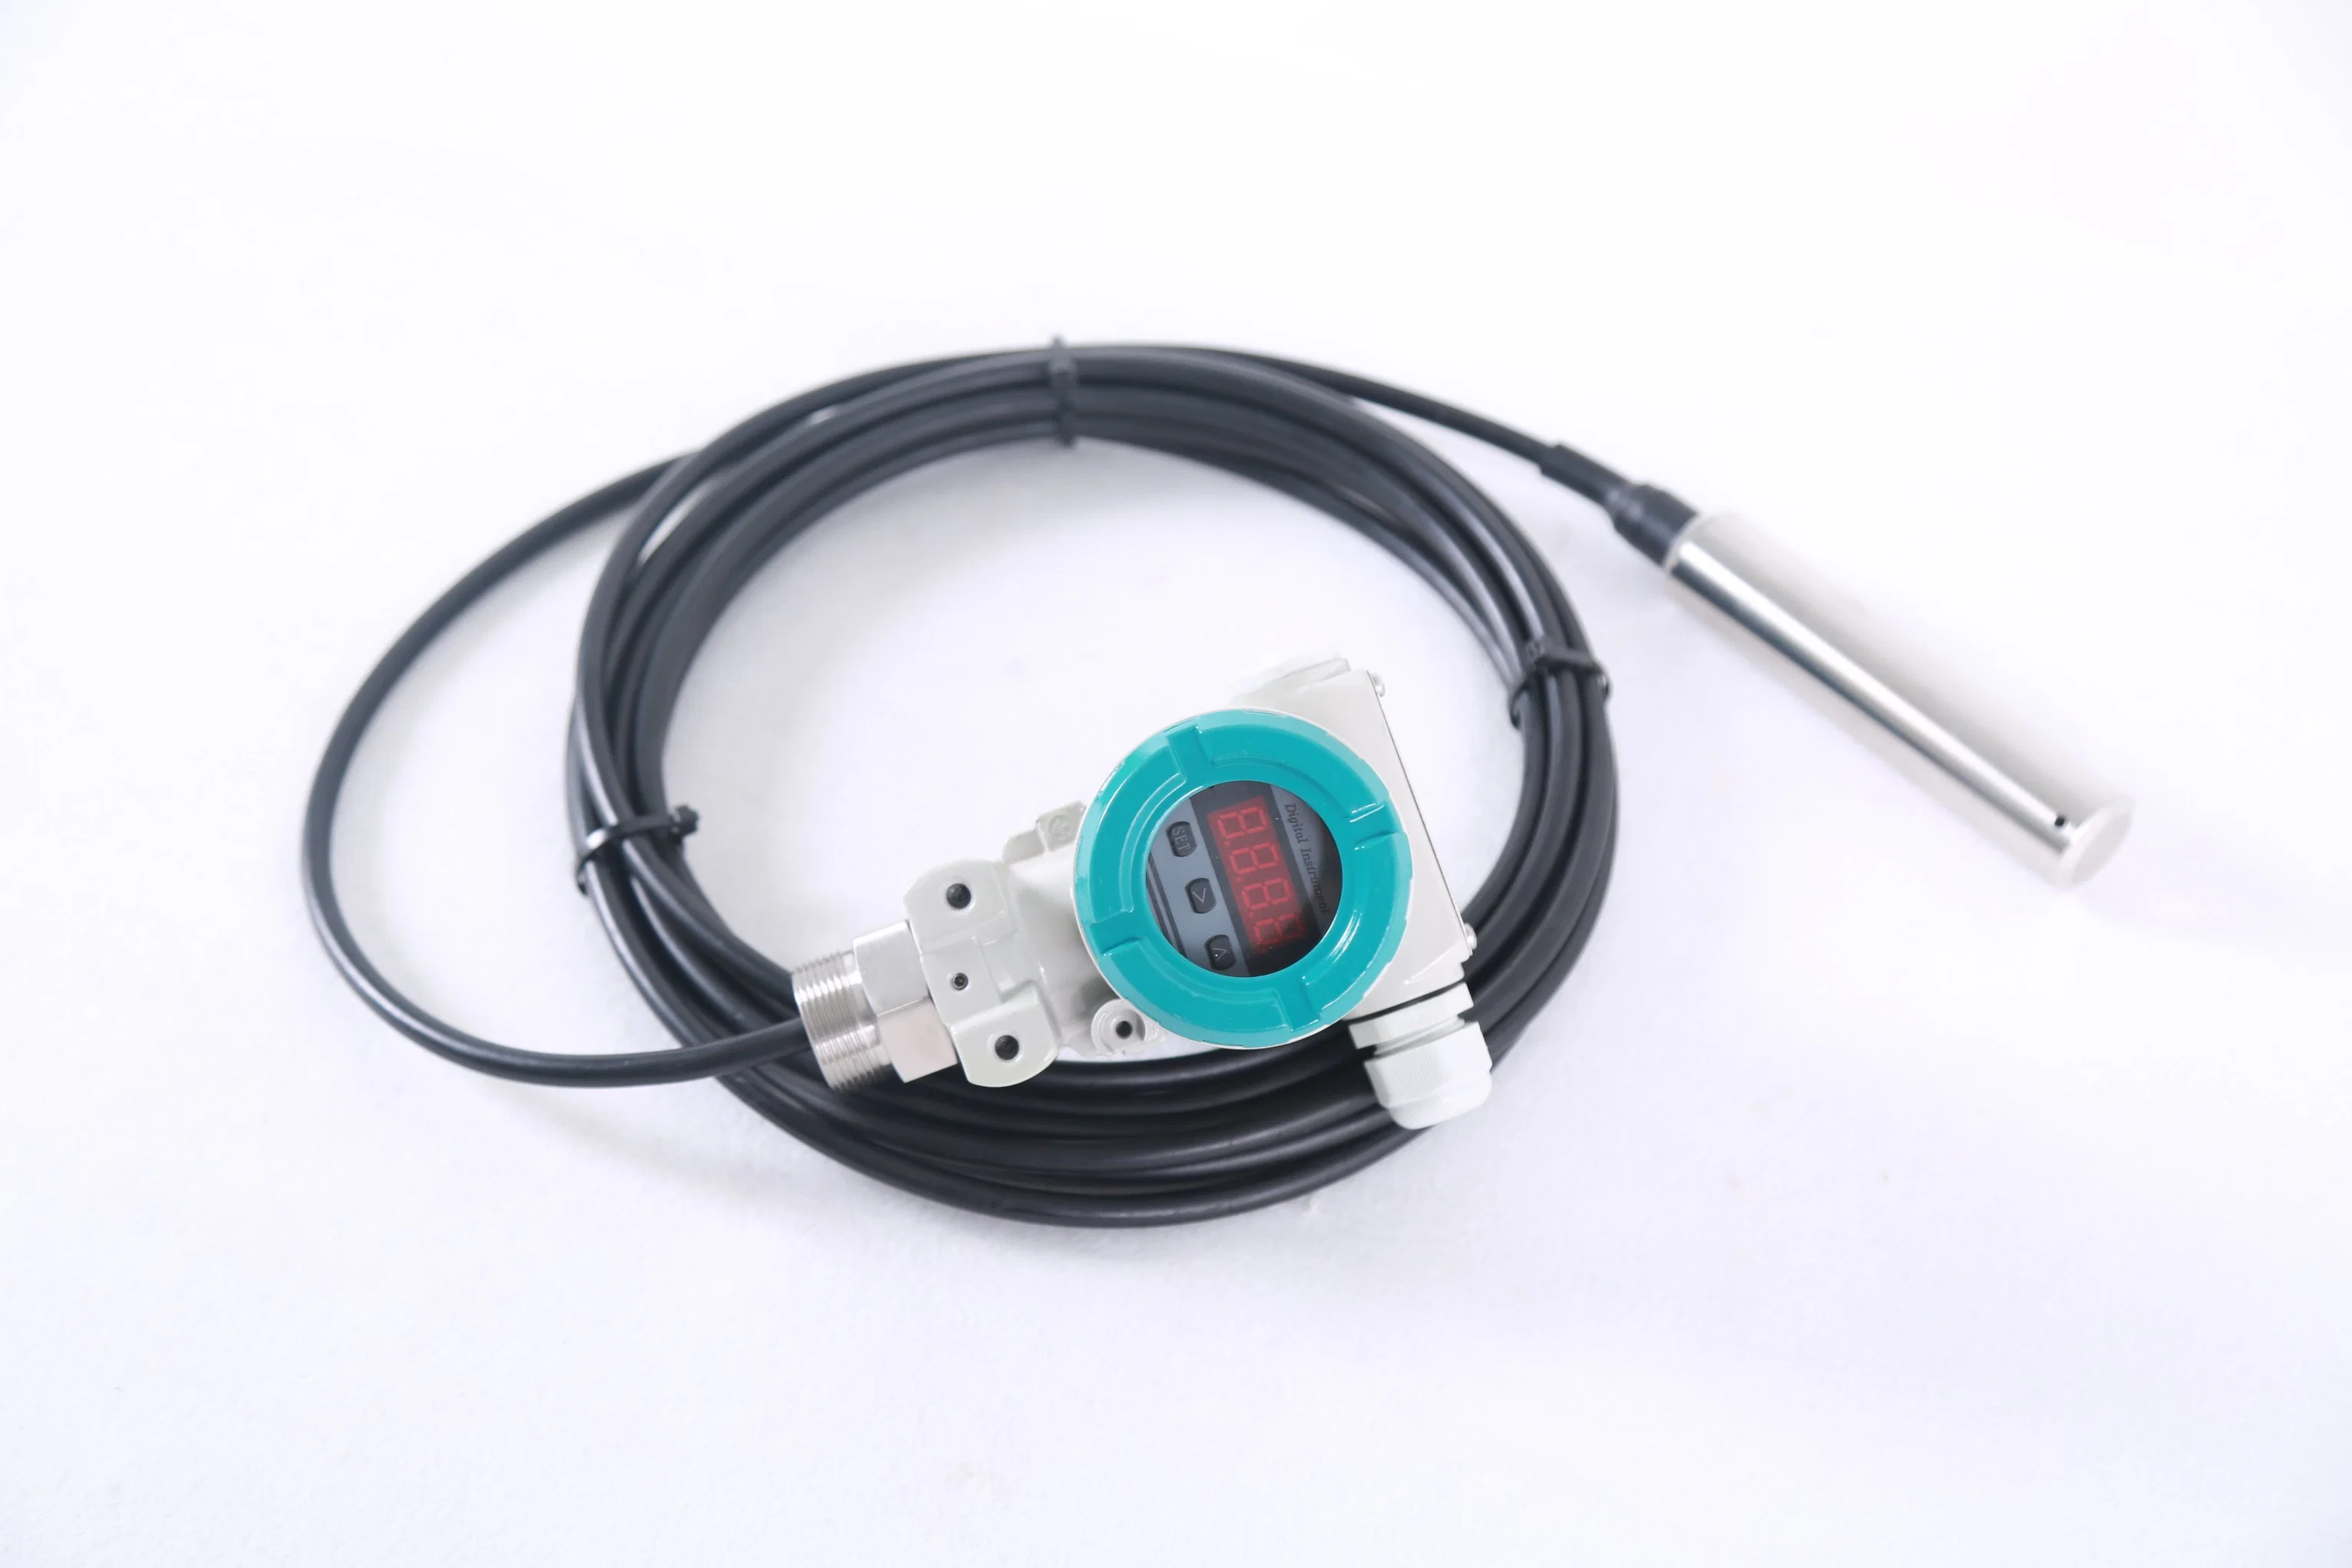 Qyb201 Hydrostatic Liquid Water Level Sensor Transmitter Instrument for Deep Wells/Diving Level 0-200m 4-20mA